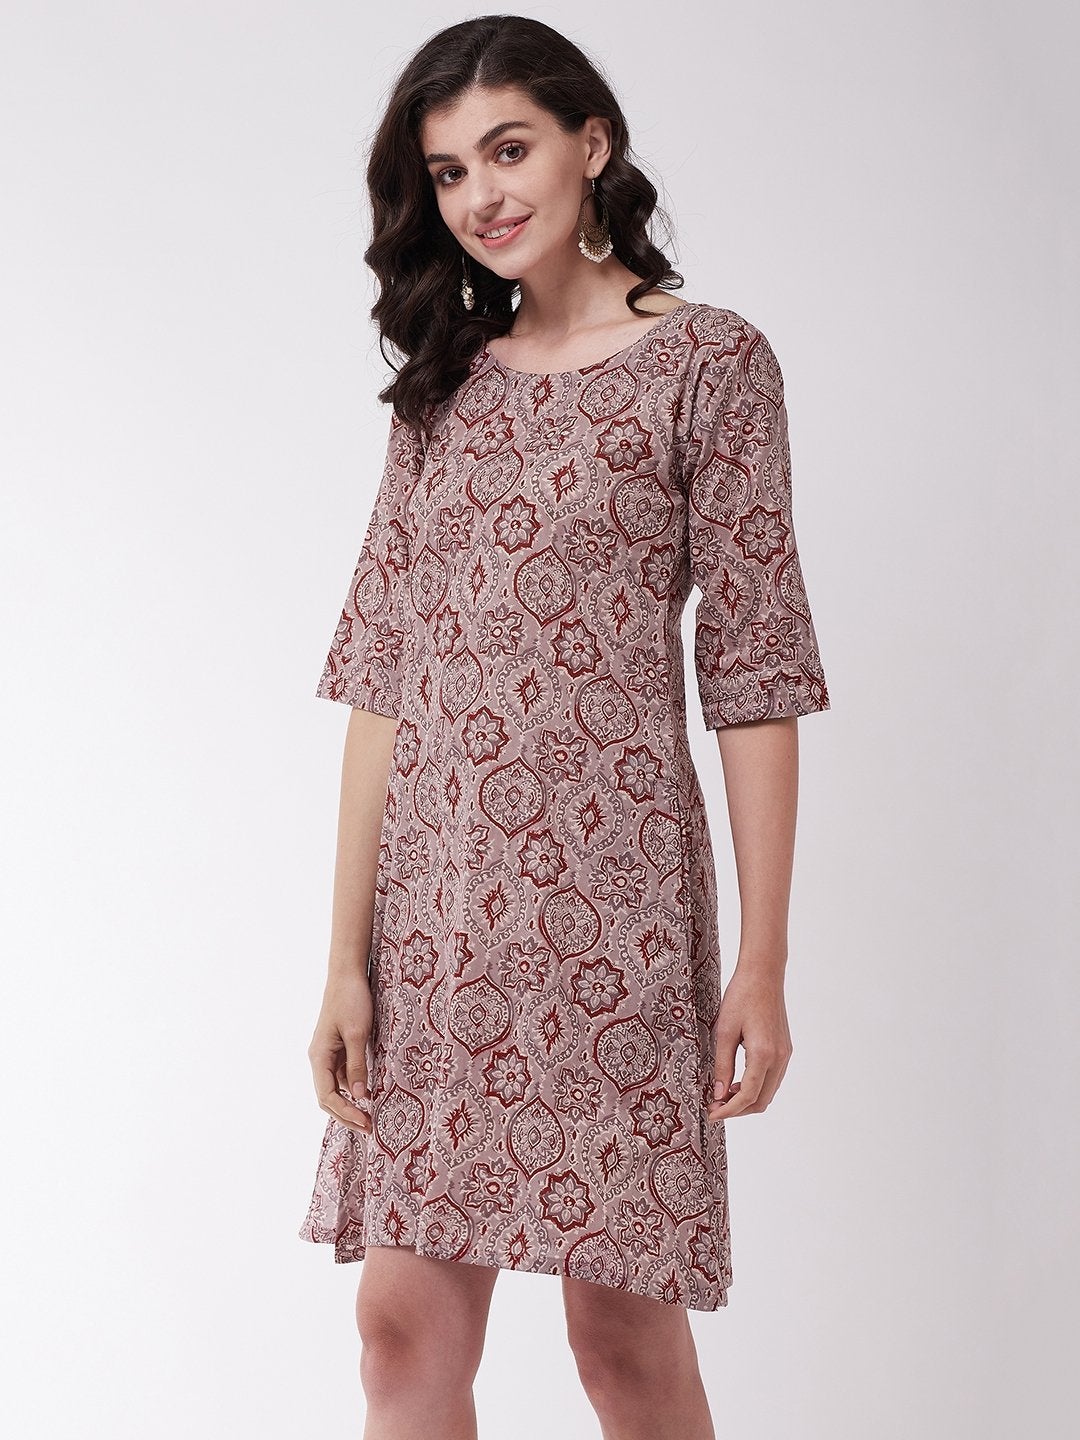 Women's Grey And Maroon Print Dress - InWeave